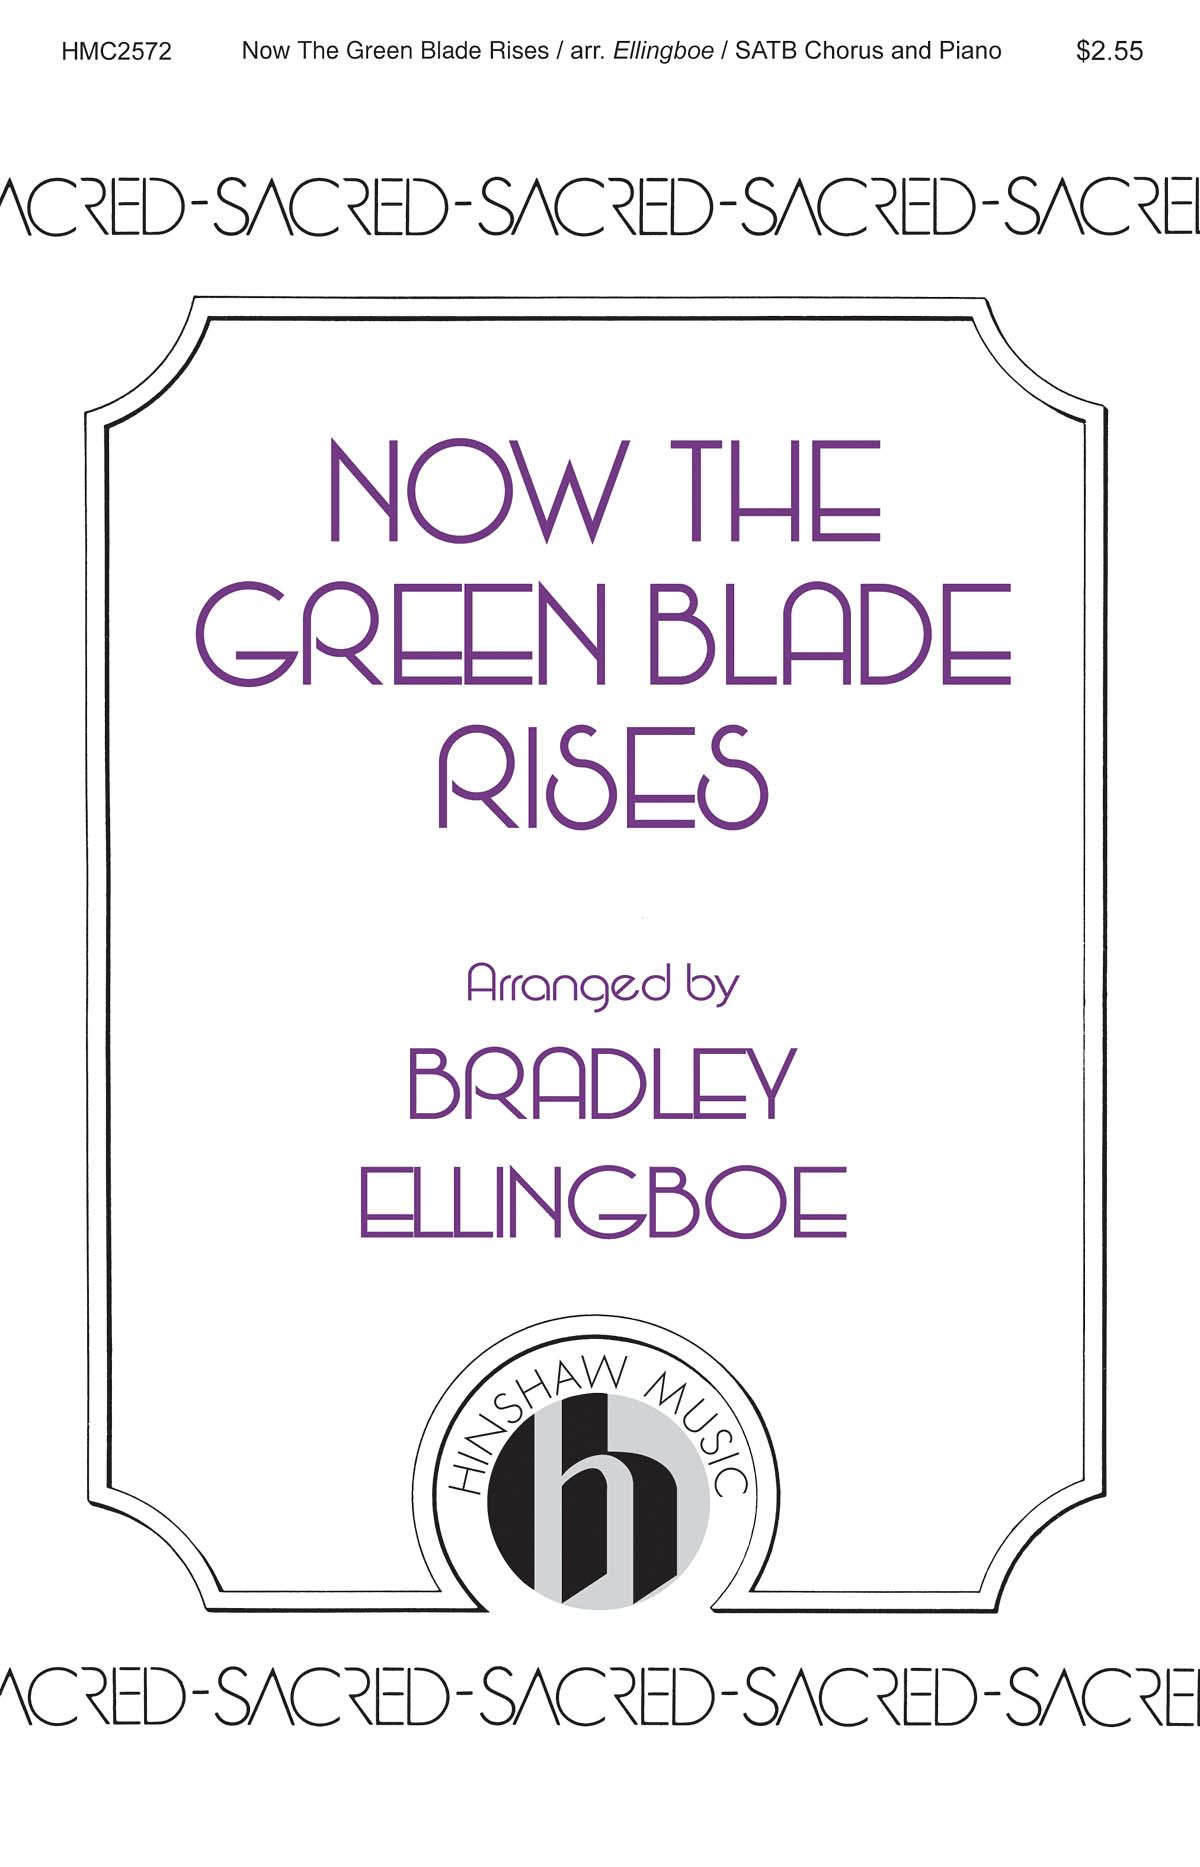 Brad Ellingboe: Now the Green Blade Rises: Mixed Choir a Cappella: Vocal Score